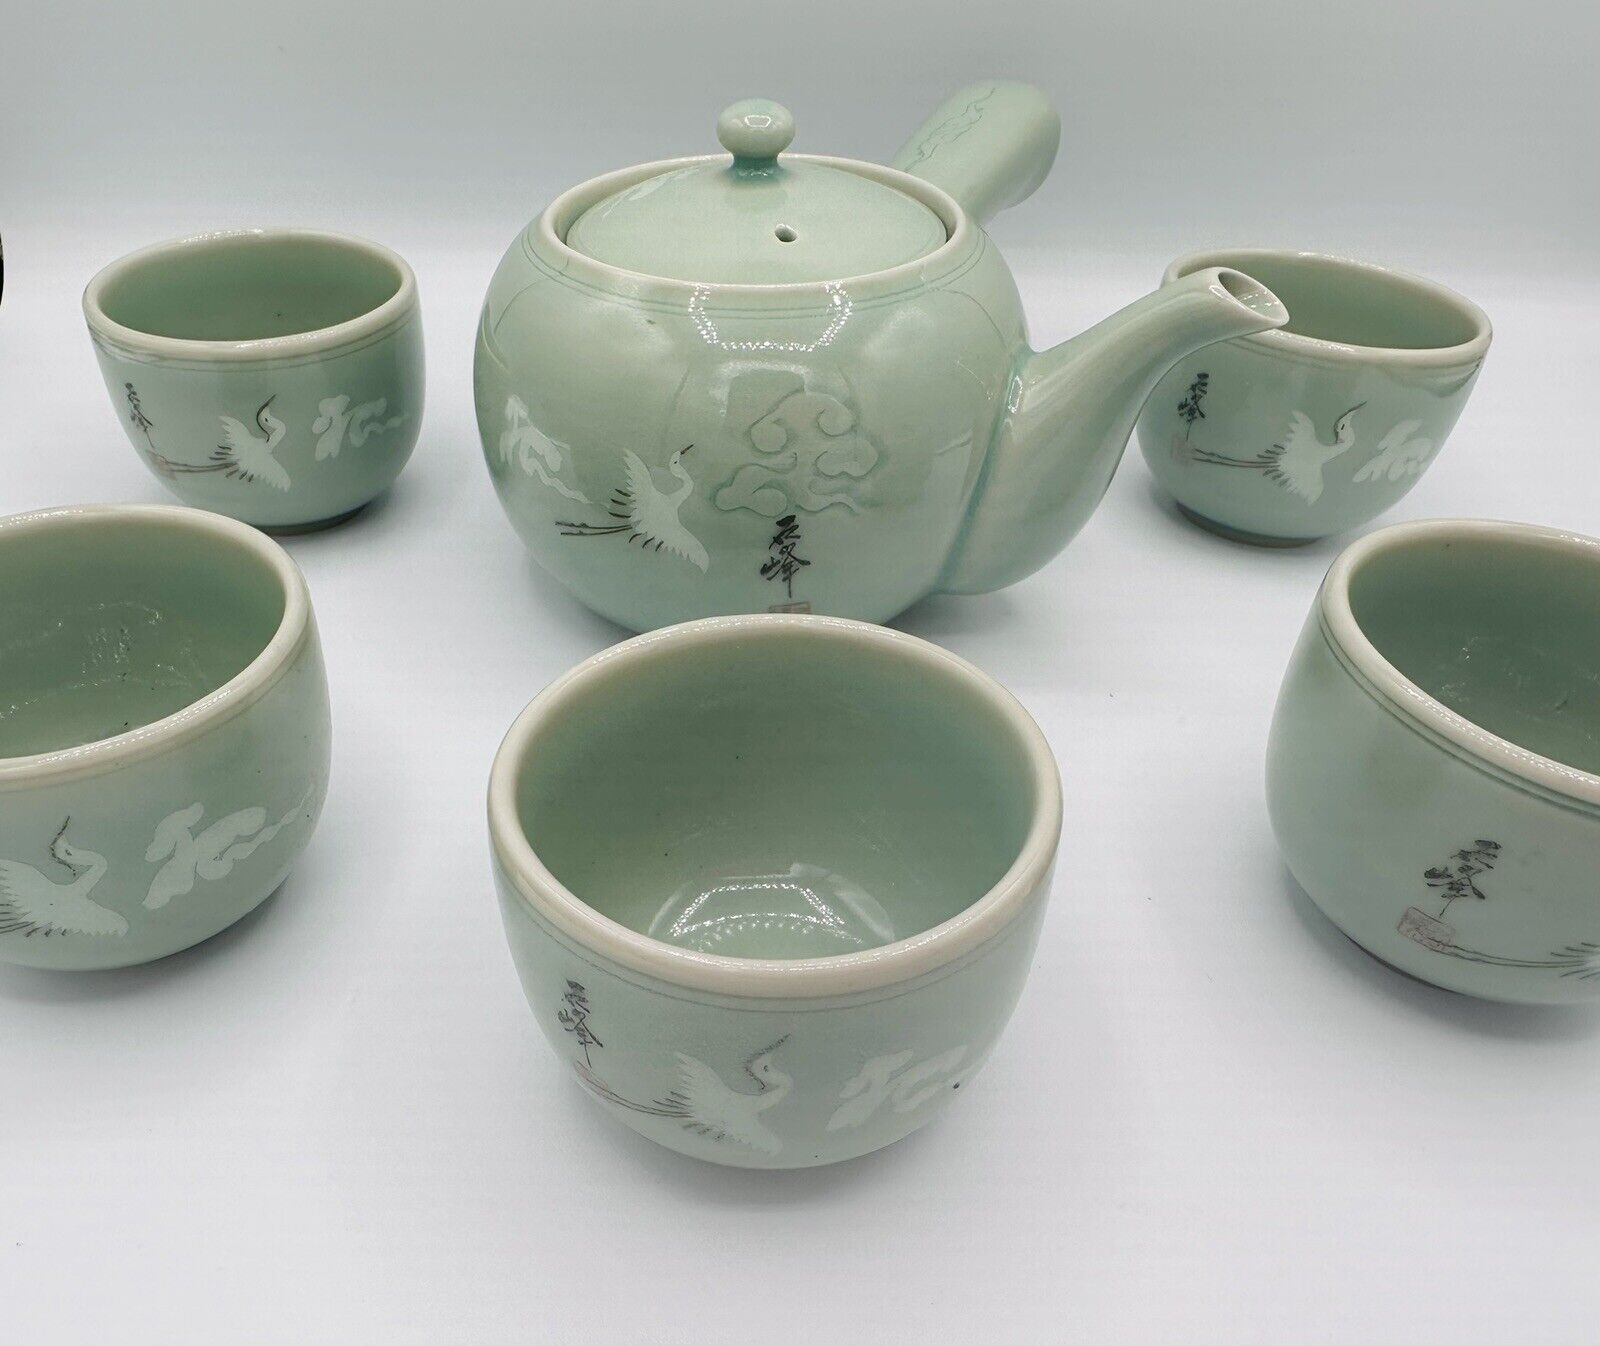 Vintage Handmade Six-Piece Korean Celadon Tea Set with Clouds & Cranes design